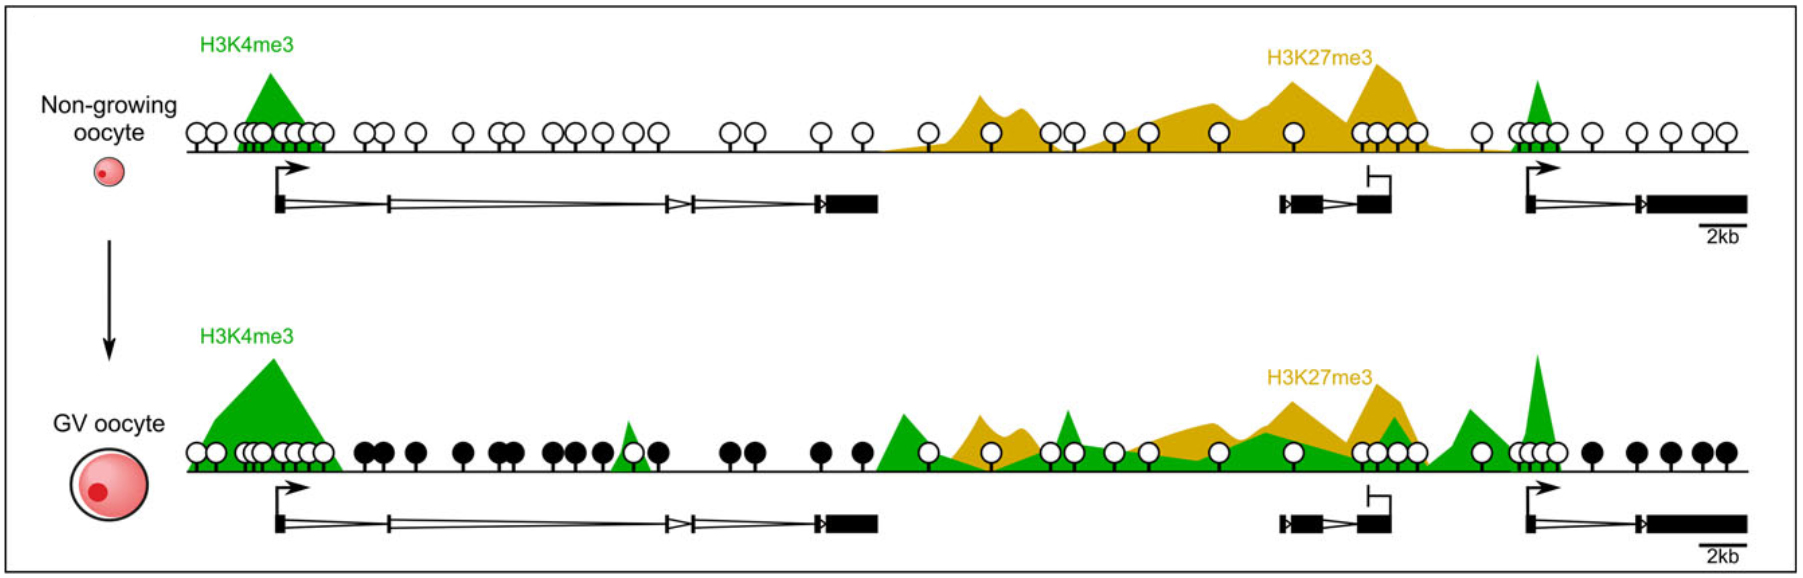 Distinctive epigenetic landscape in mouse oocytes